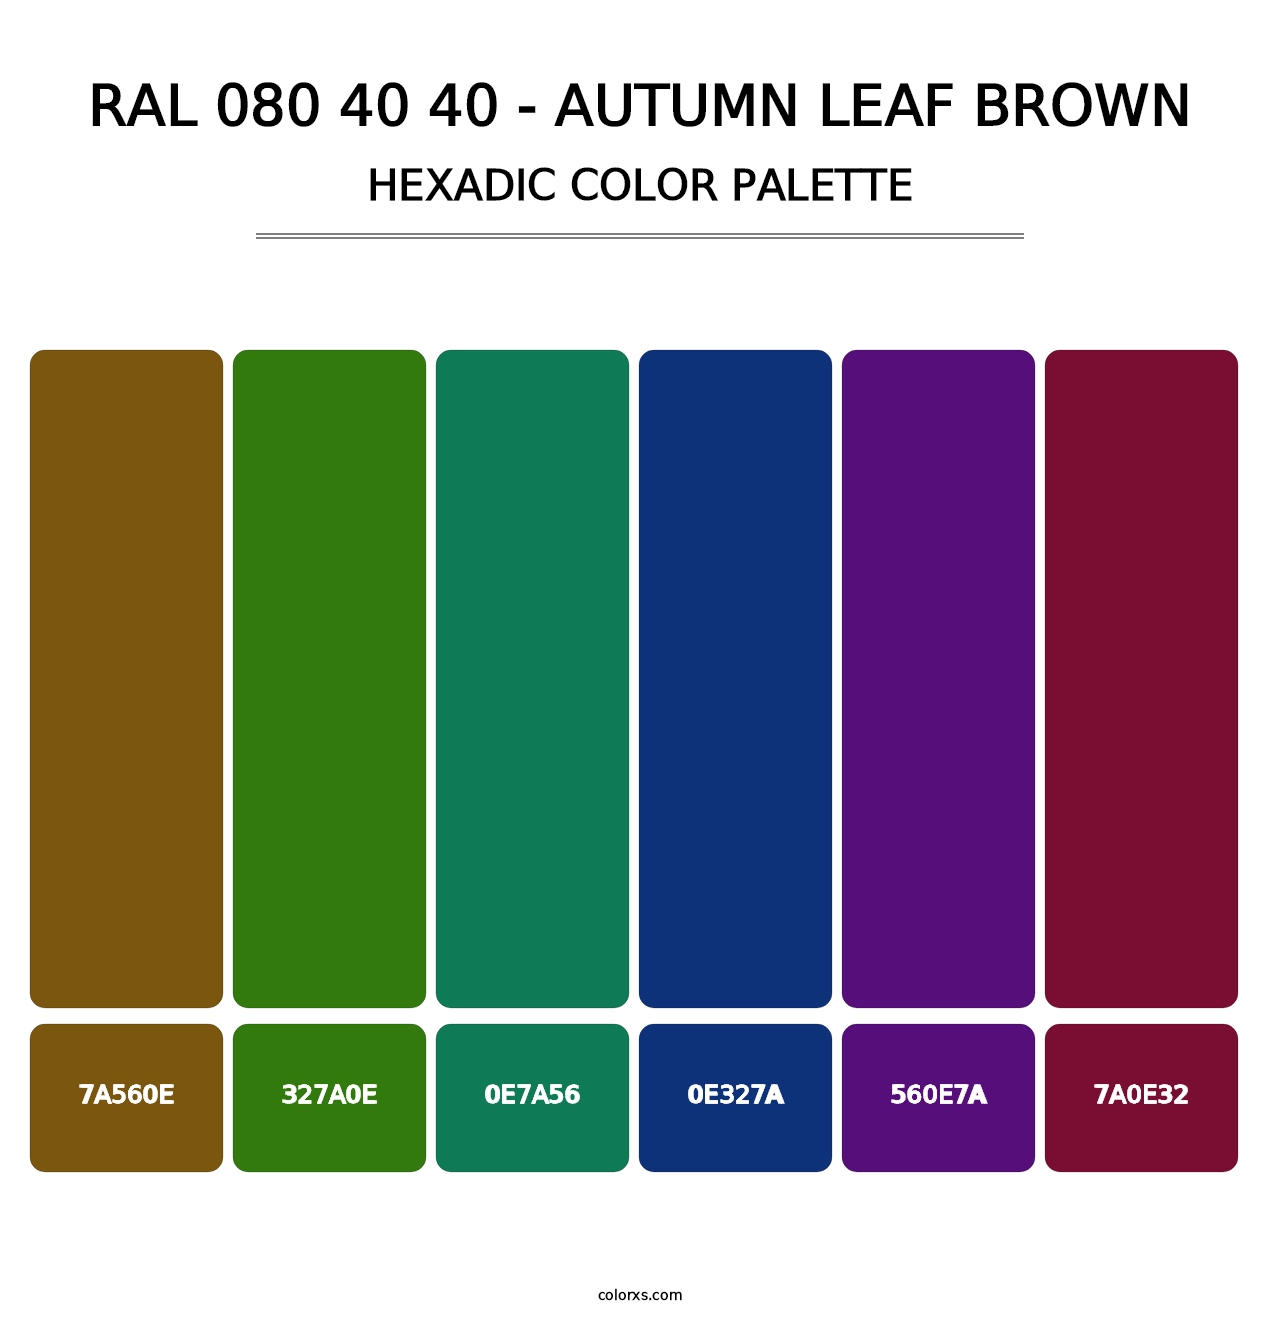 RAL 080 40 40 - Autumn Leaf Brown - Hexadic Color Palette